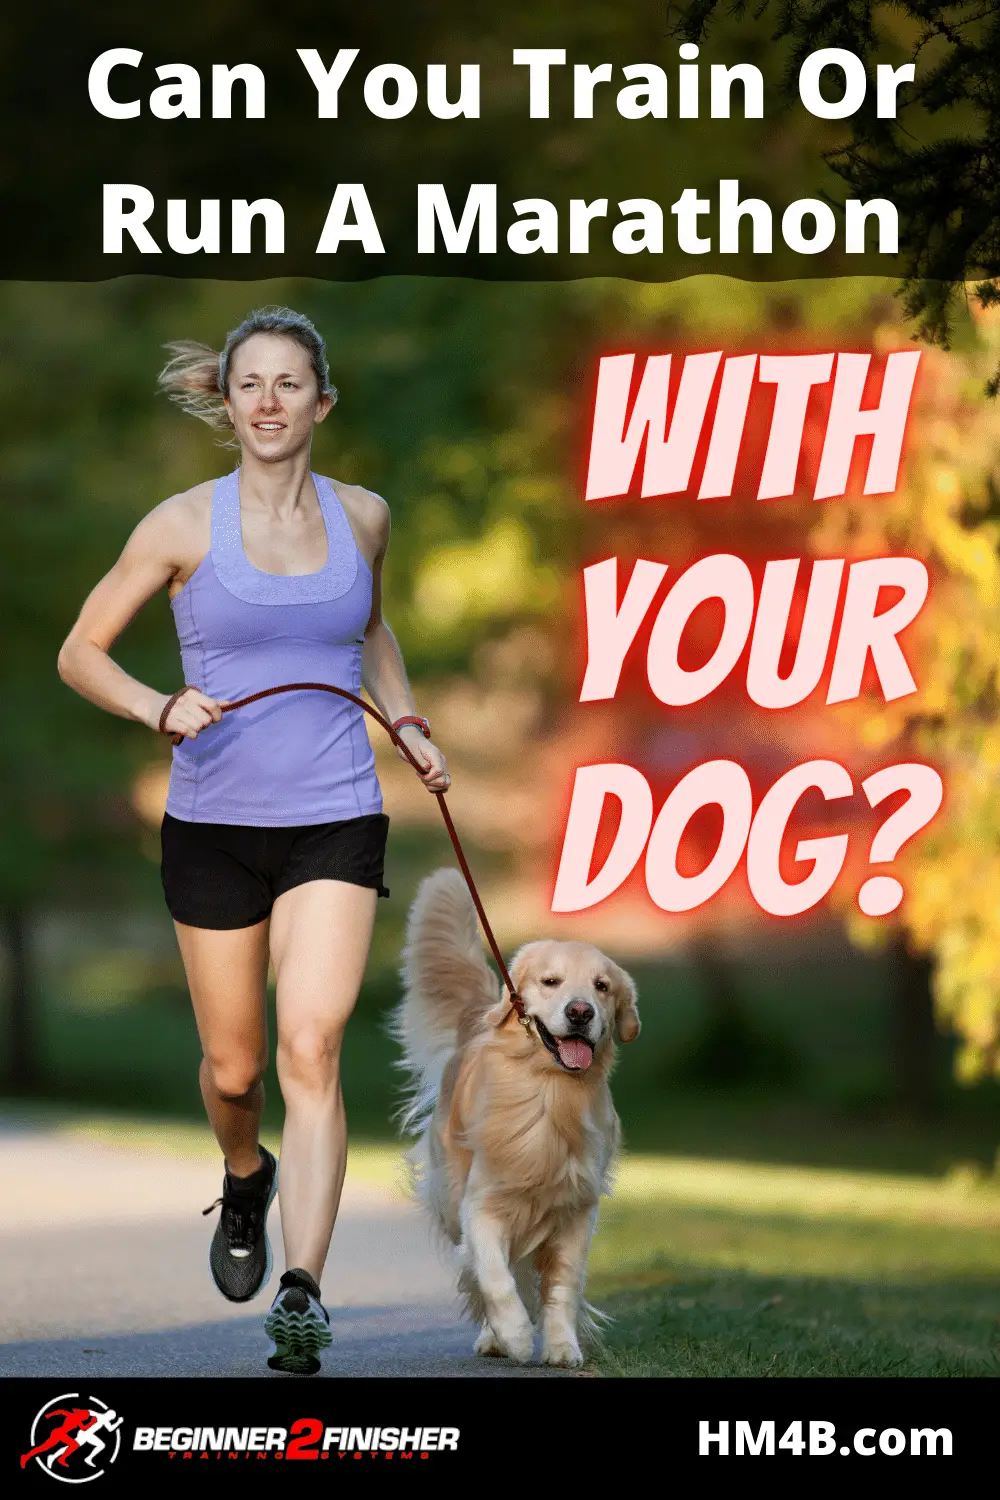 Can You Train Or Run A Half Marathon Or Marathon With A Dog?